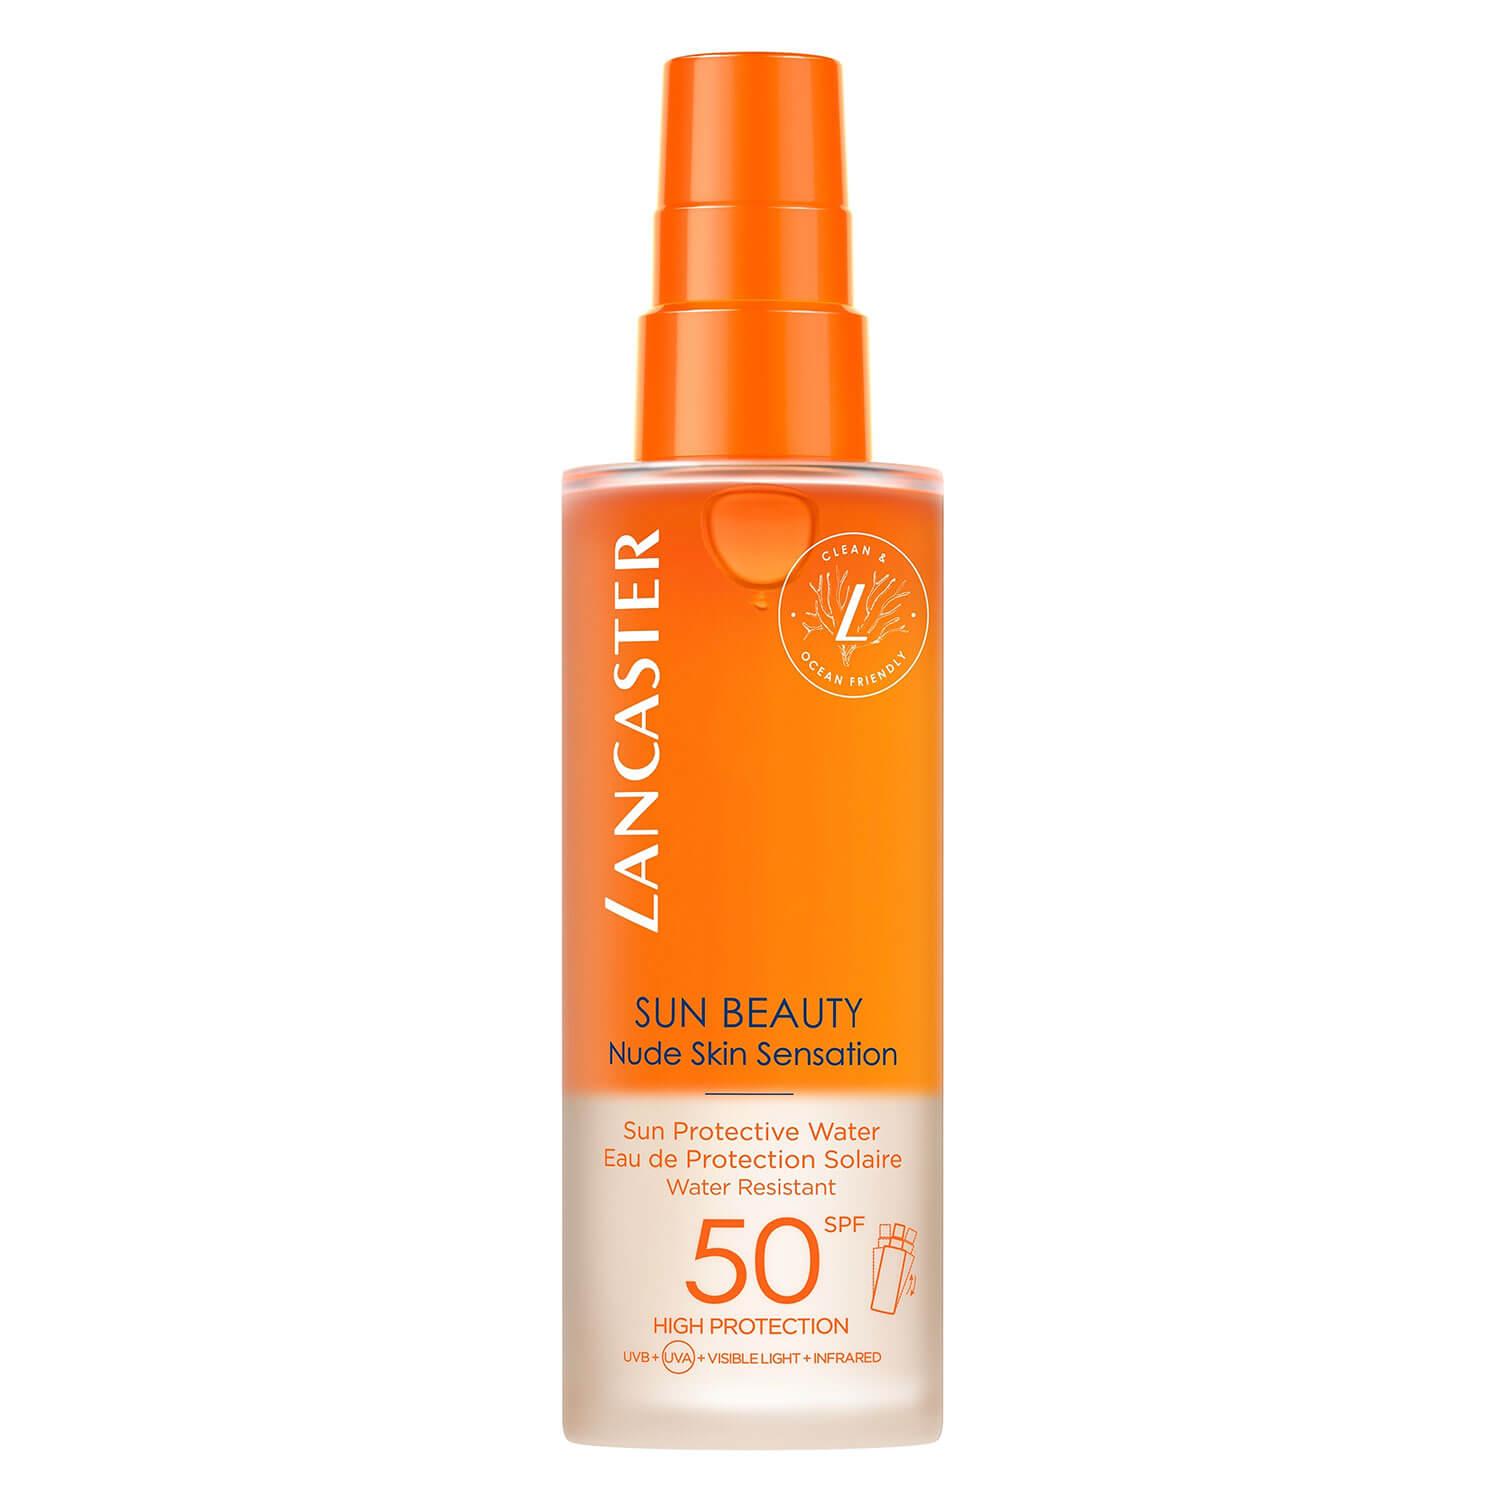 Sun Beauty - Nude Skin Sensation Sun Protection Water SPF50